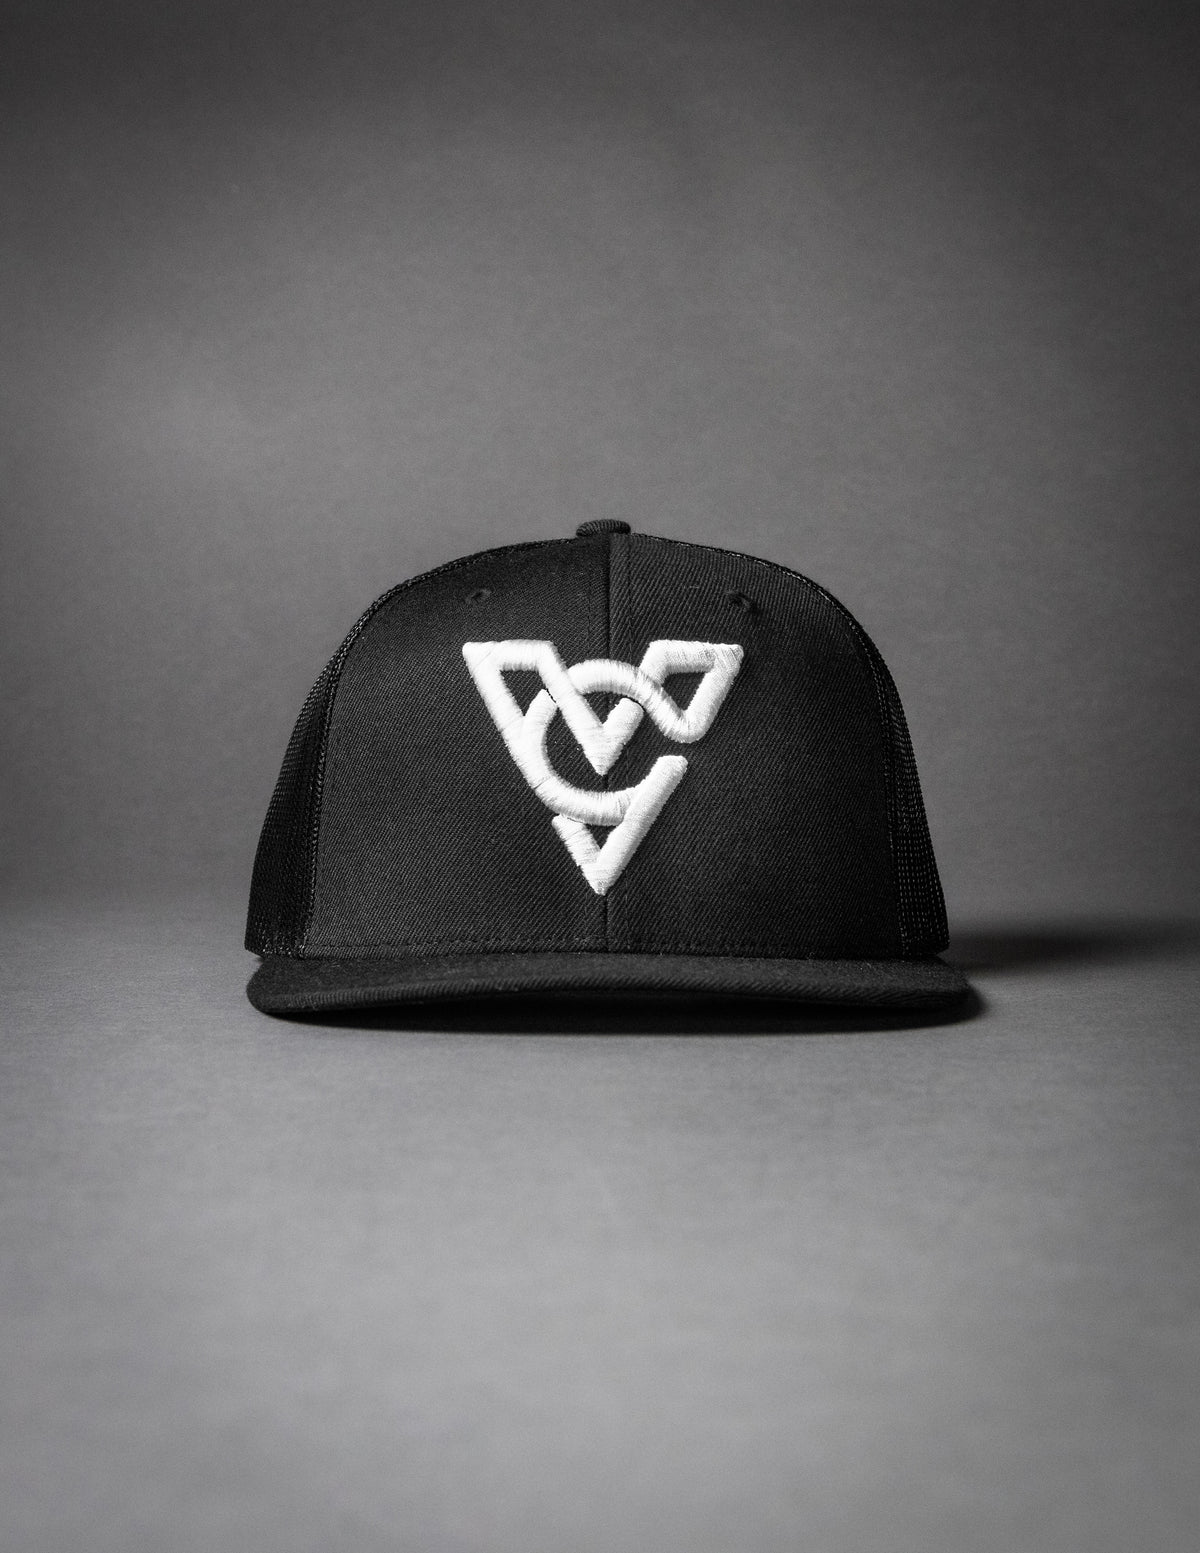 VC WOOL BLEND FLATBILL TRUCKER HAT (Black/Black/White Puff)